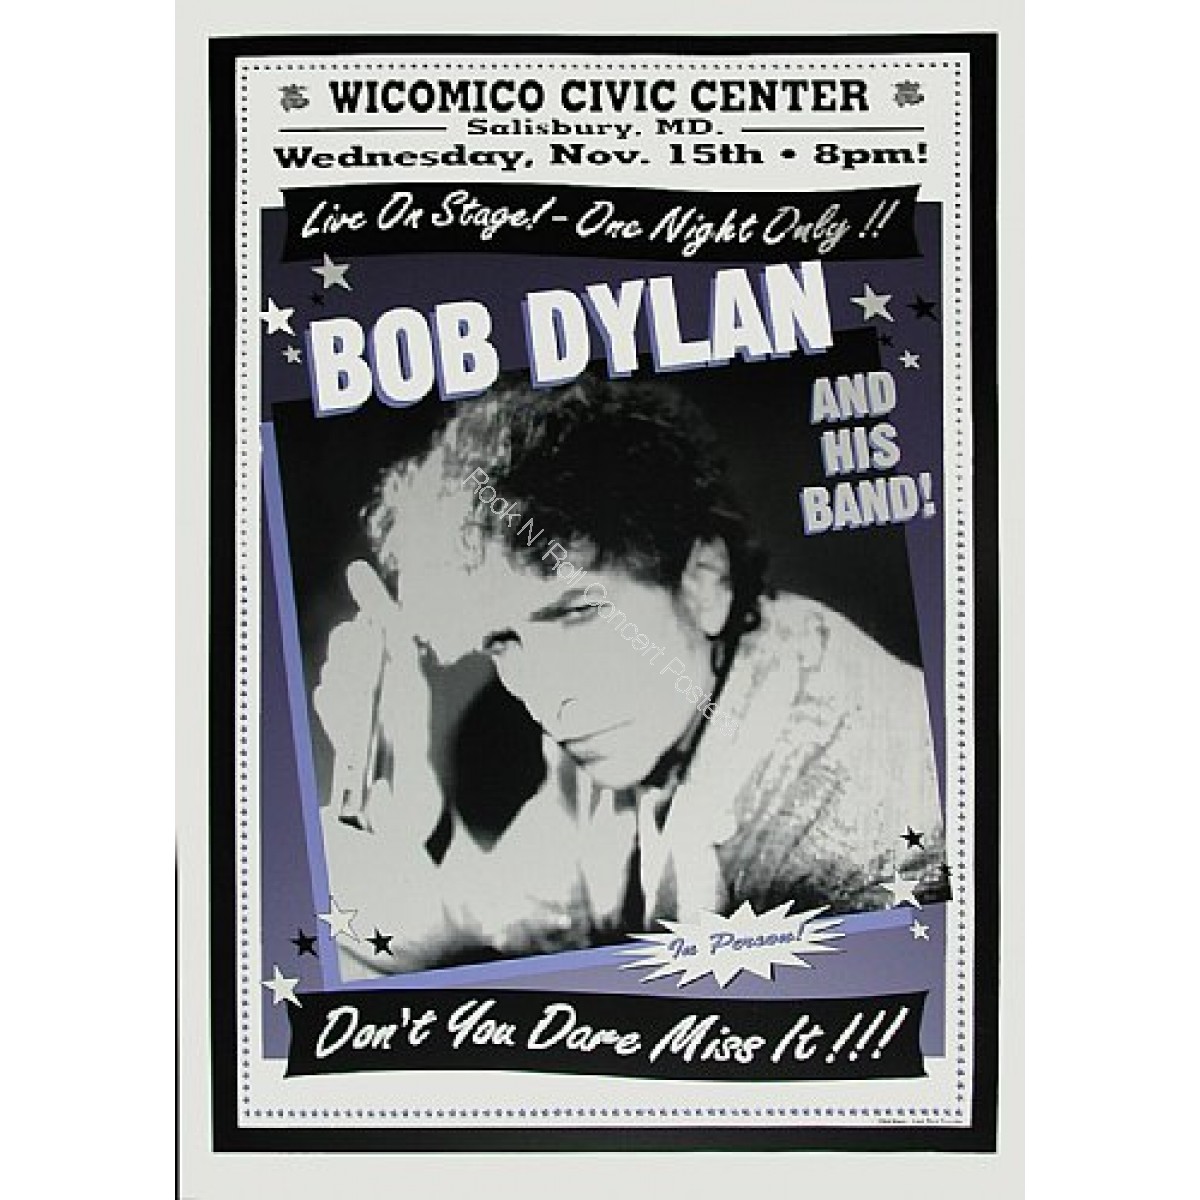 Bob Dylan & His Band Wicomico Civic Center